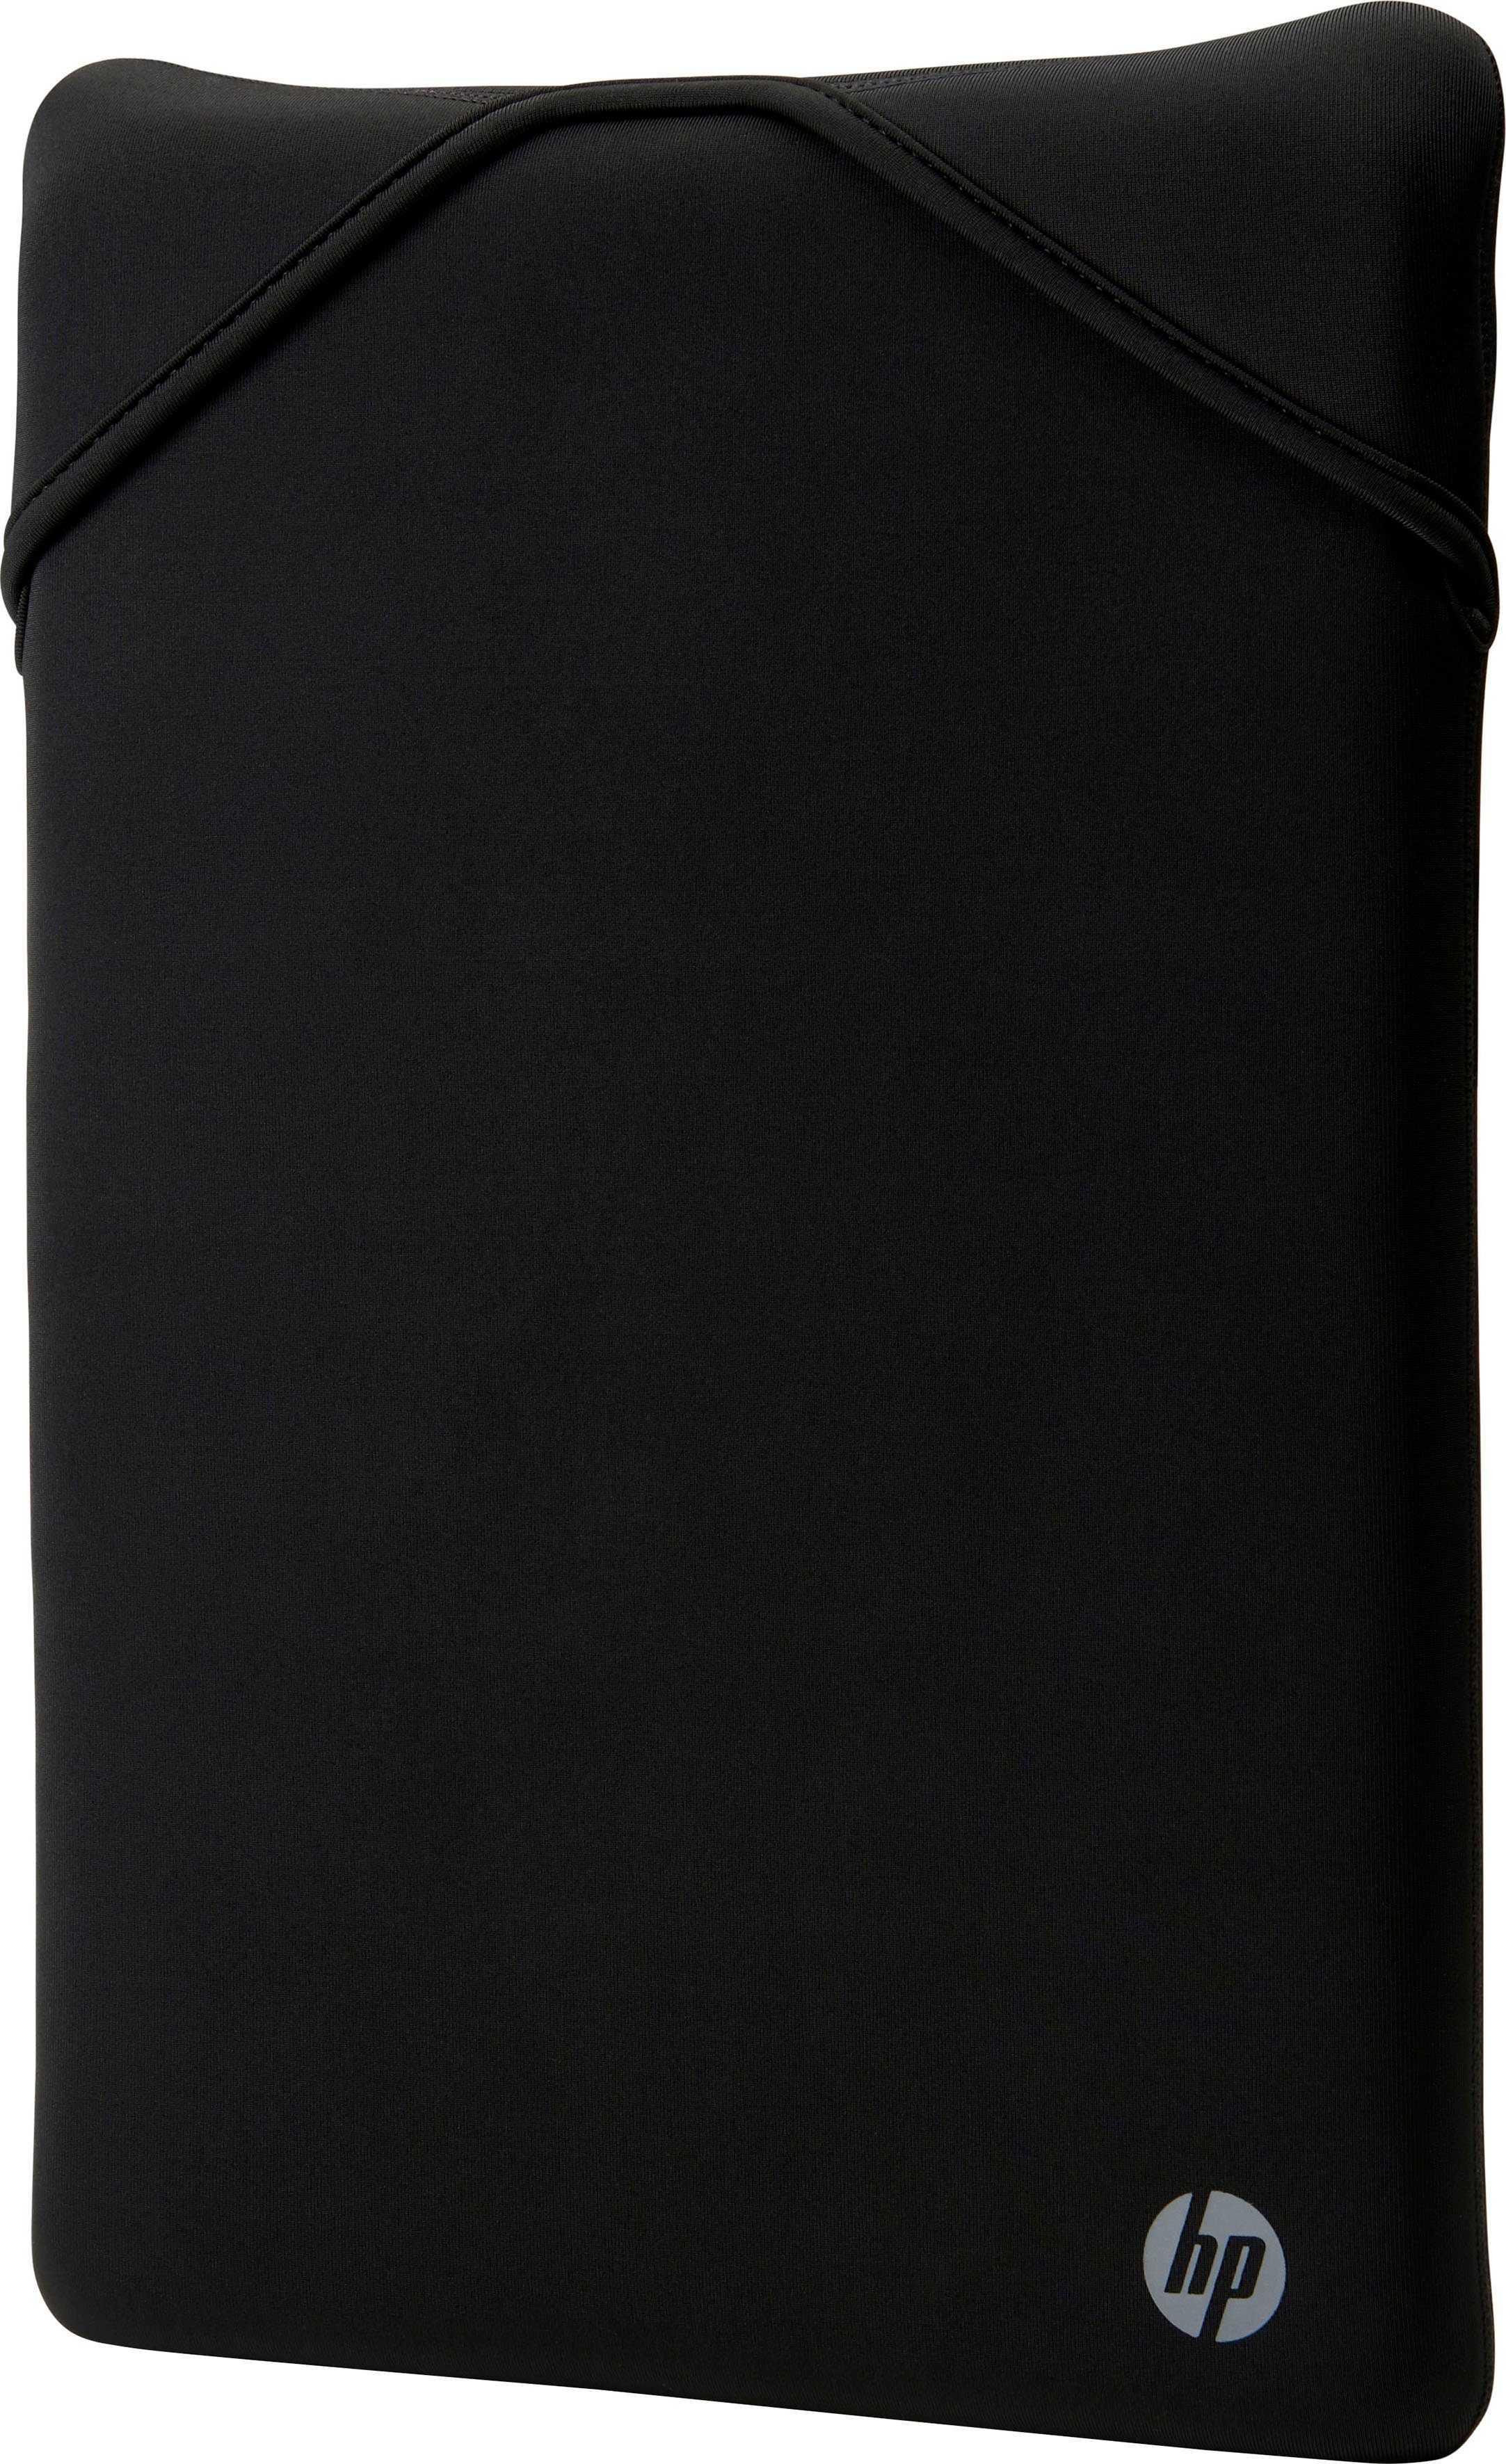 HP Blk/Geo (P) Laptoptasche schwarz-grau 14Zoll Sleeve Protective 35,6cm Reversible